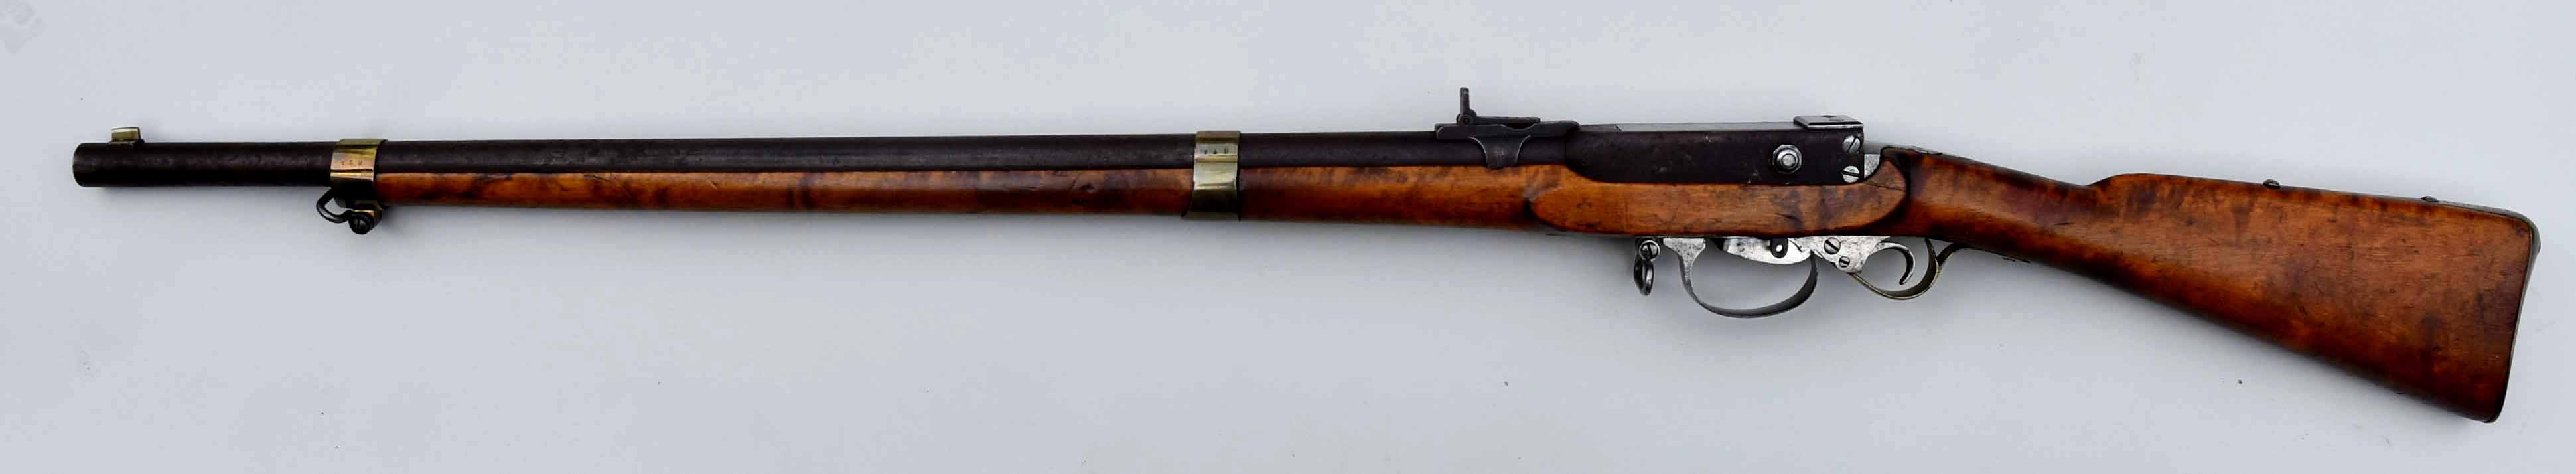 ./guns/rifle/bilder/Rifle-Kongsberg-Kammerlader-M1842-55-59-159-2.jpg